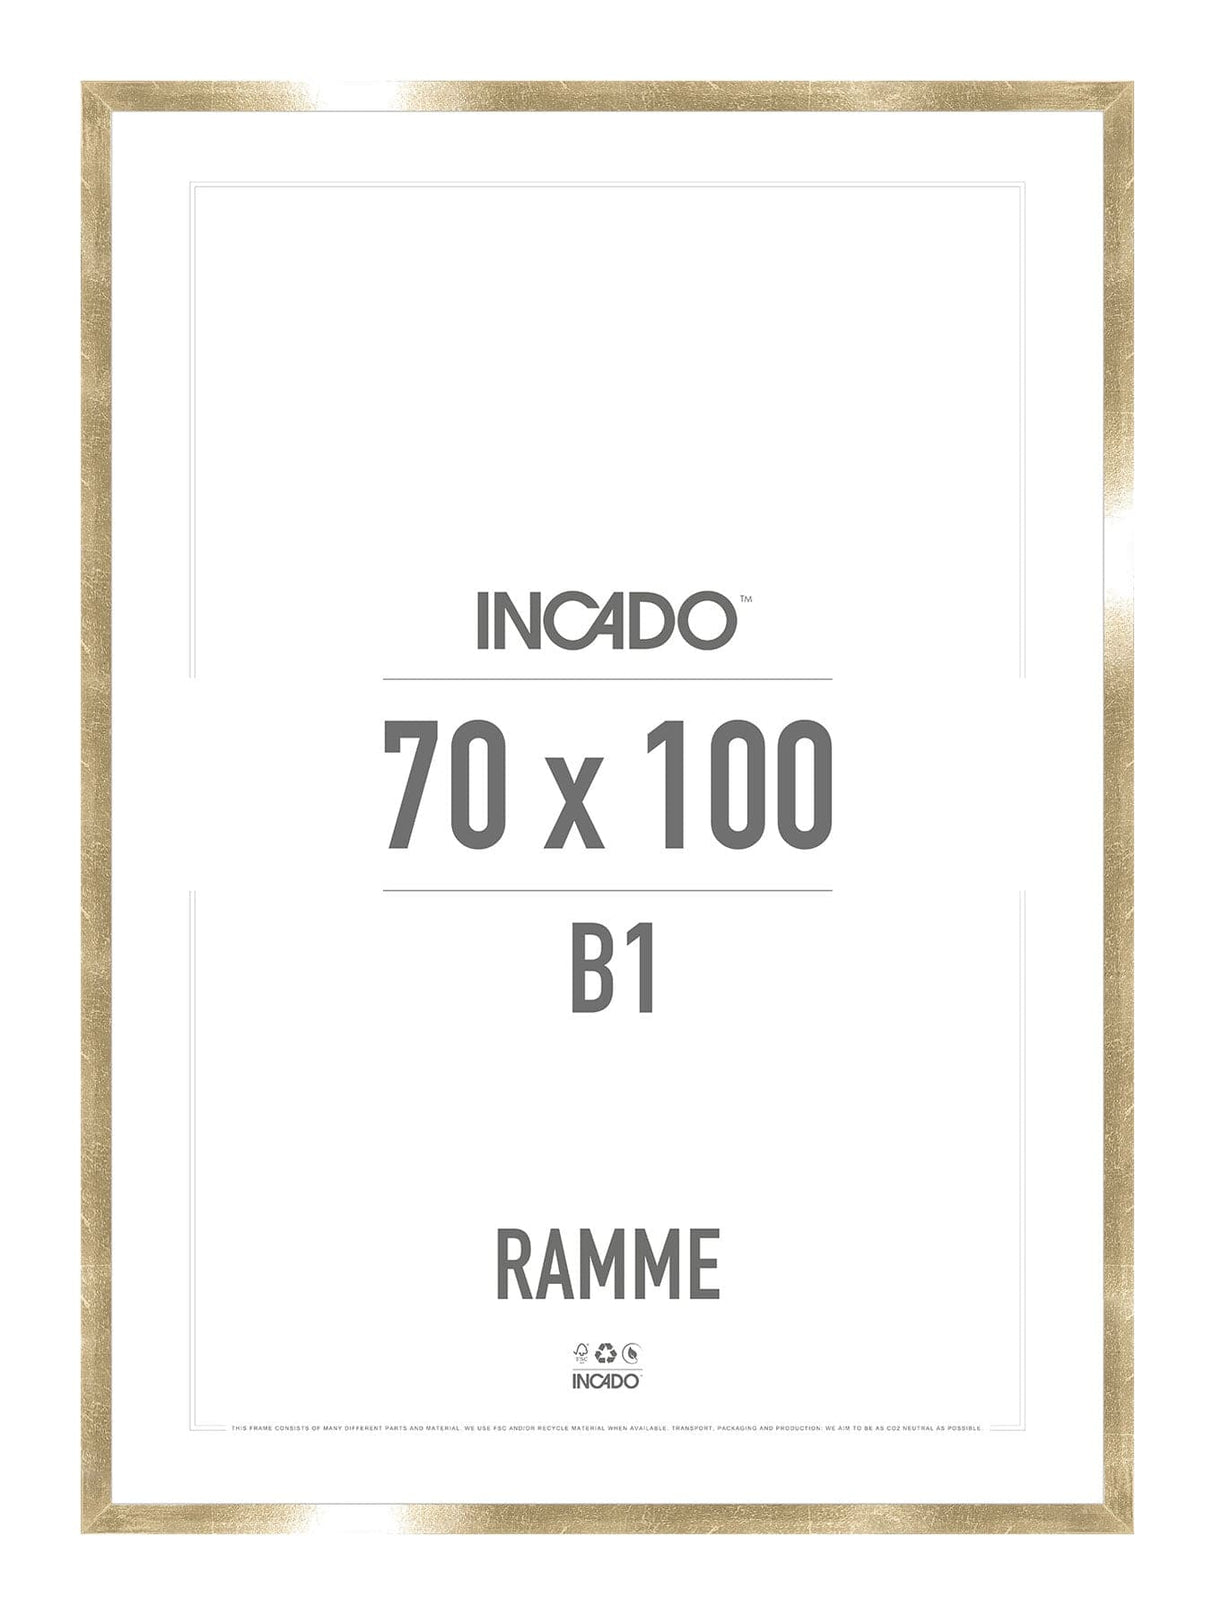 Guld Ramme - Incado NordicLine - 70 x 100 cm 70 x 100  cm Ramme